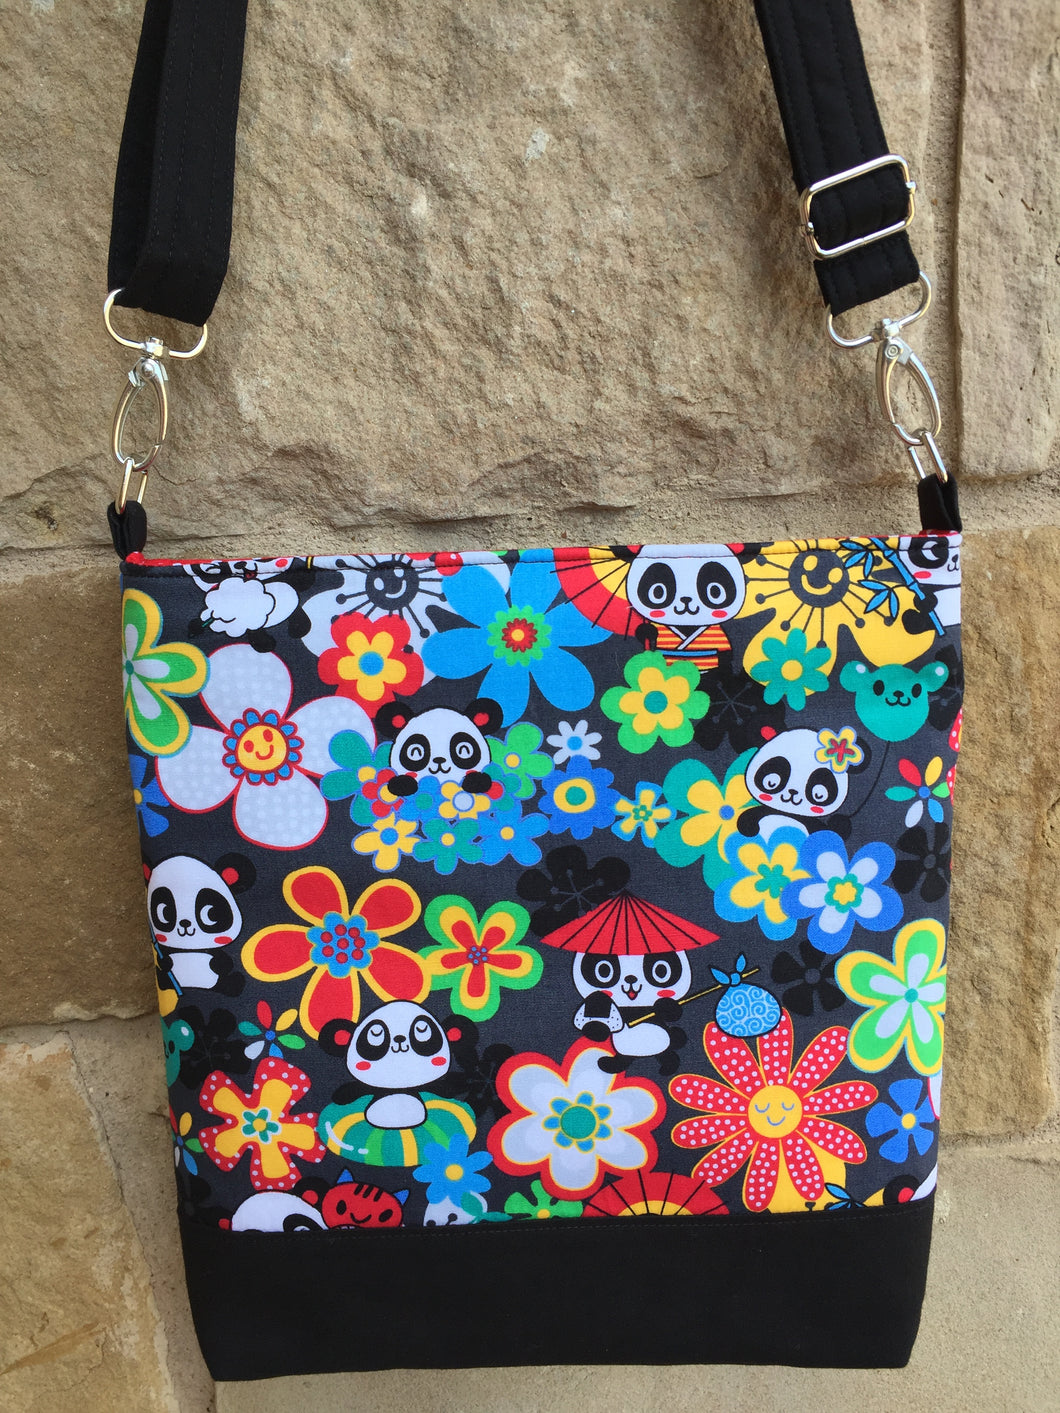 Messenger Bag Made With Asian Panda Bear Inspired Fabric - Adjustable Strap - Zippered Closure - Zippered Pocket - Cross Body Bag